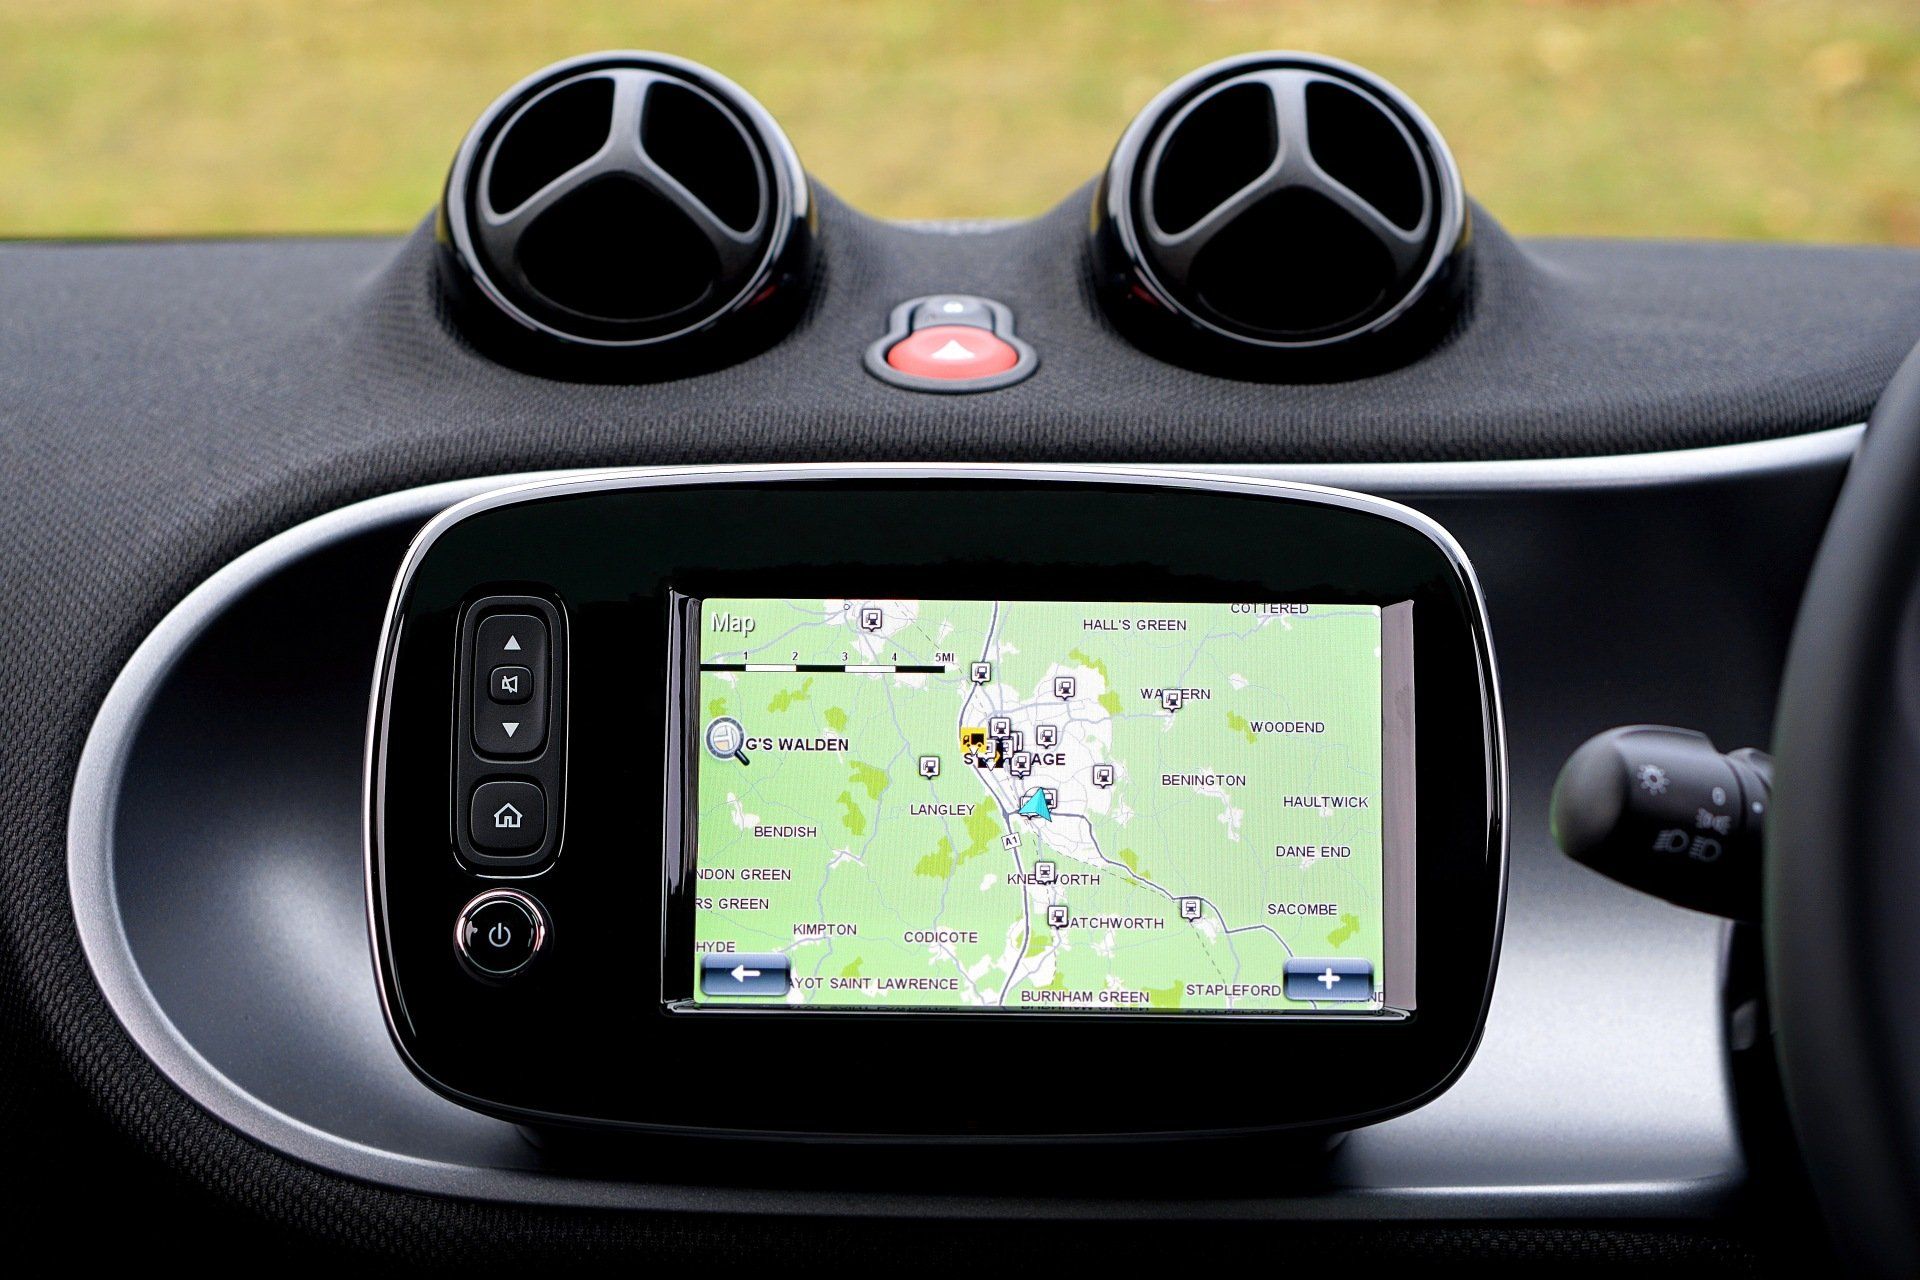 A photograph of a car navigation map